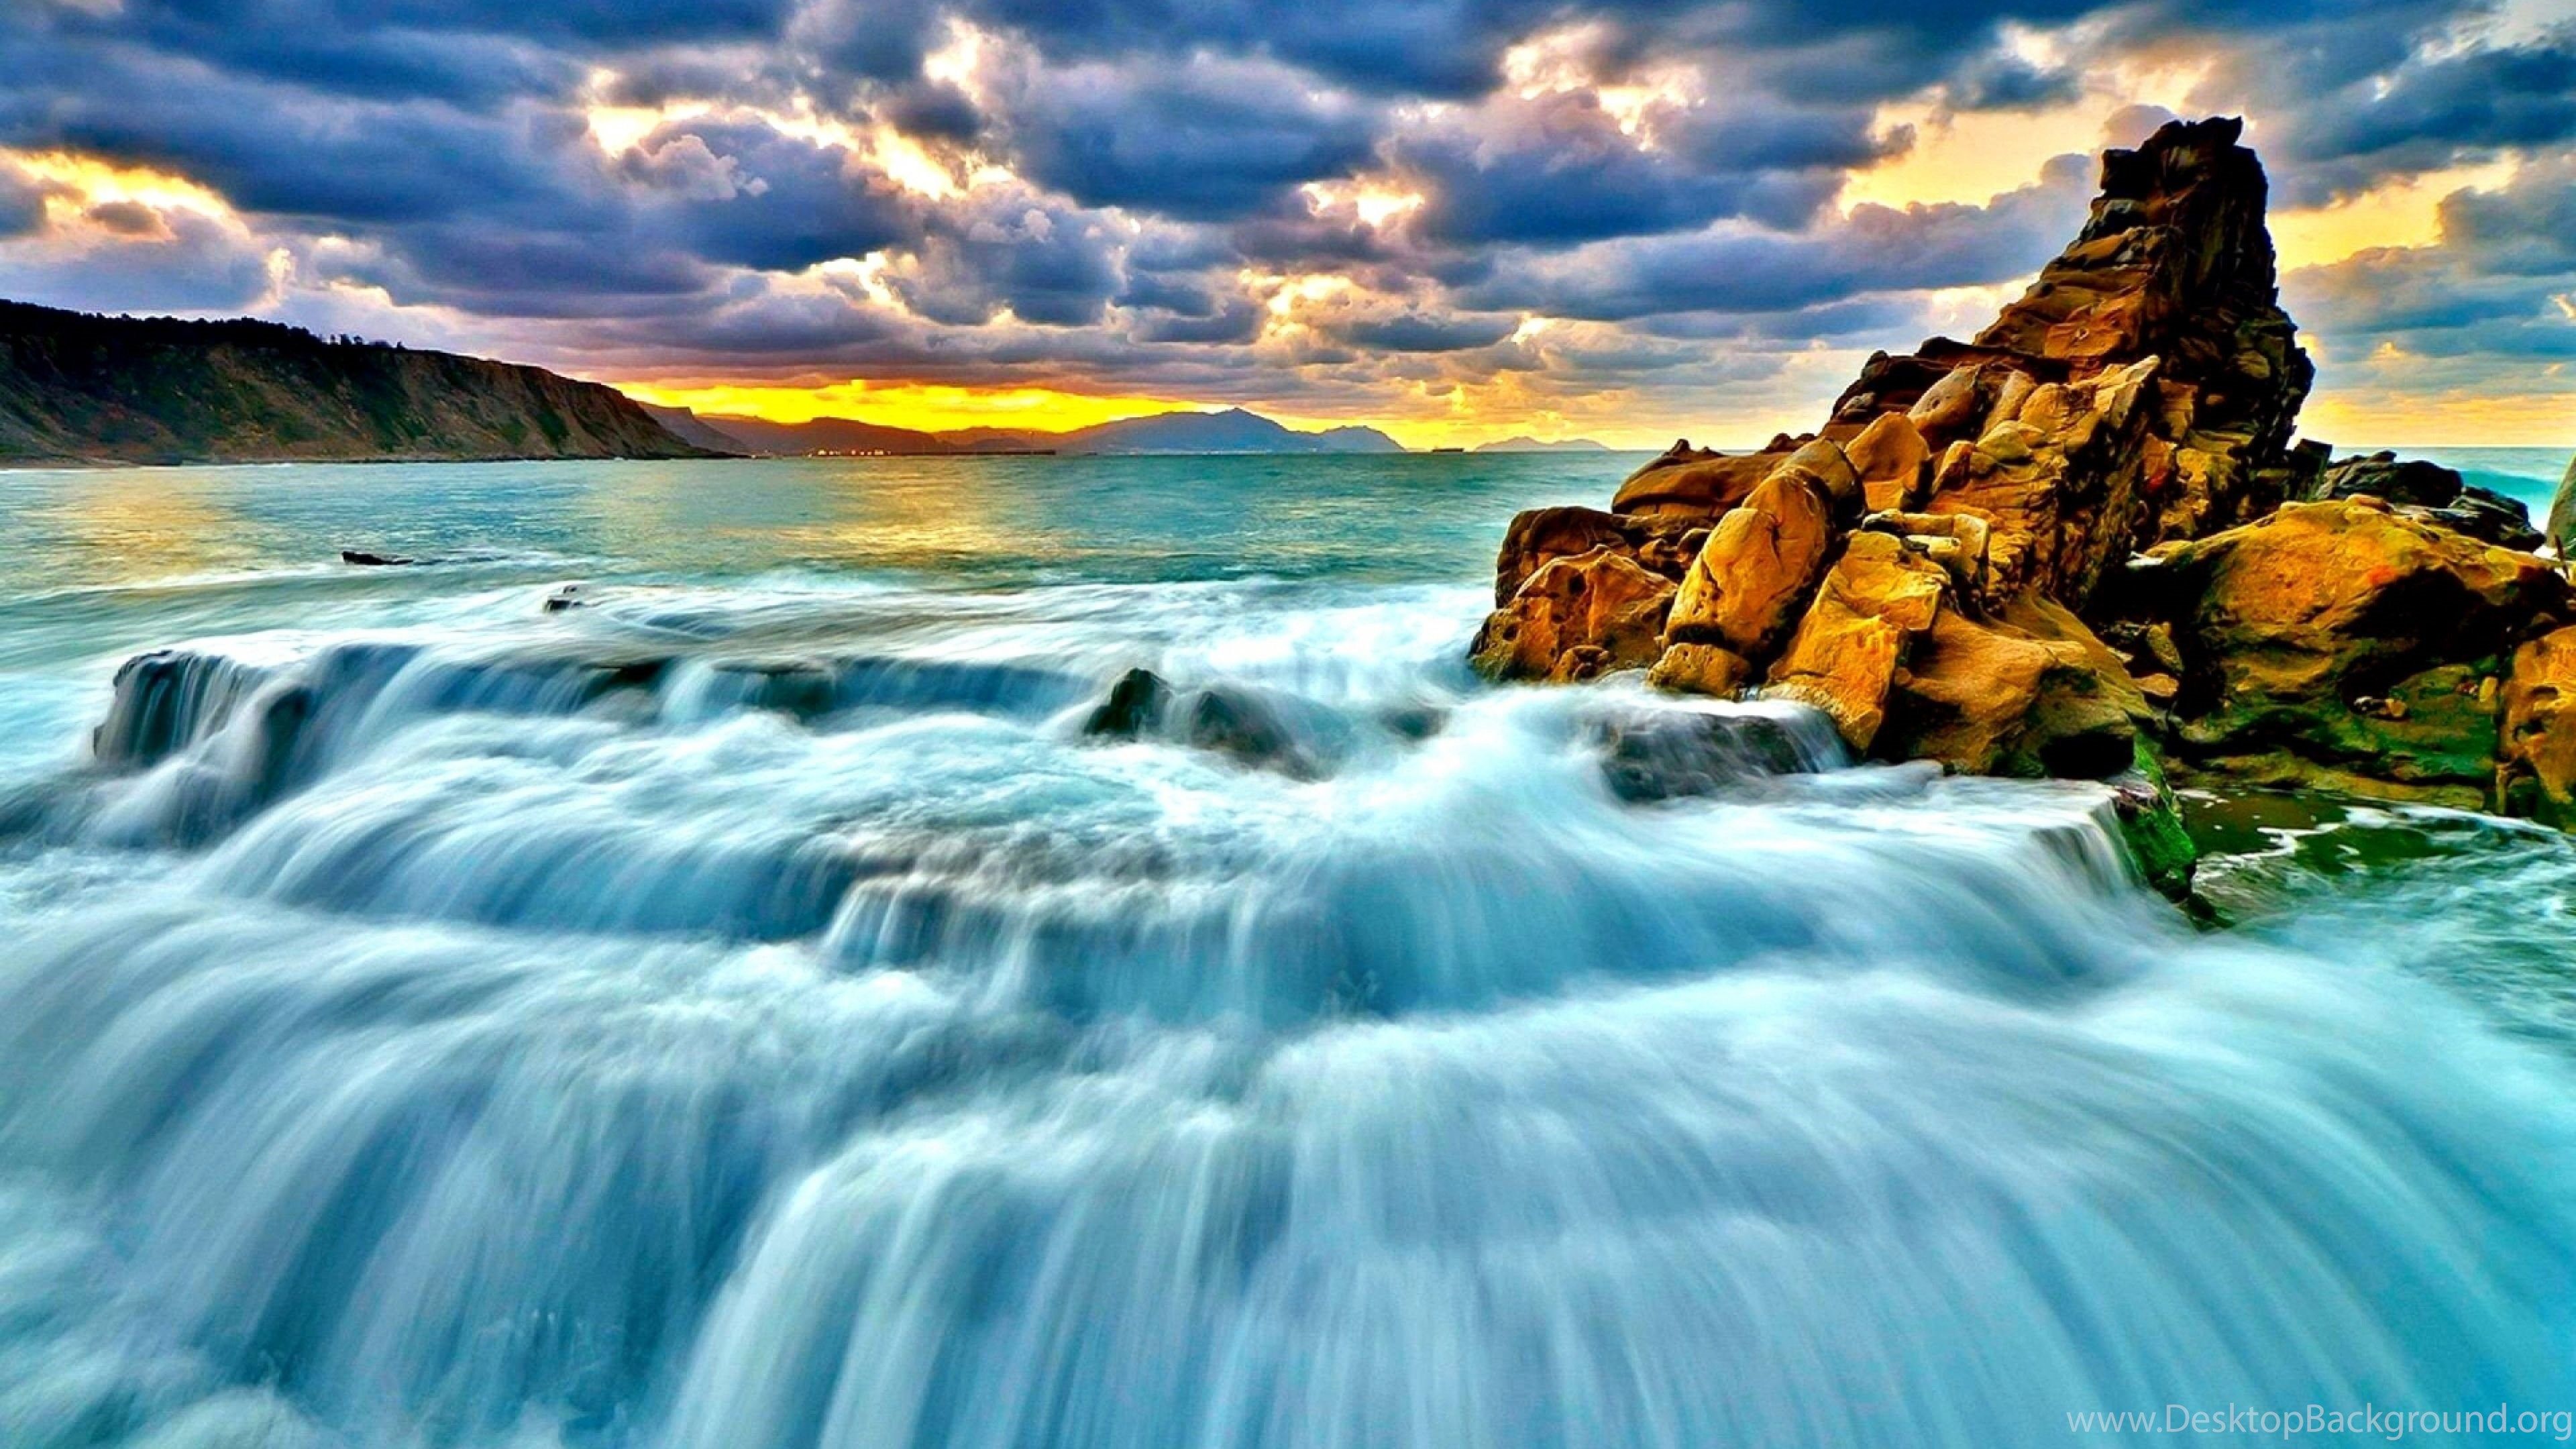 Download Wallpaper 3840x2160 Sea, Surf, Sunset, Waterfall 4K Ultra. Desktop Background